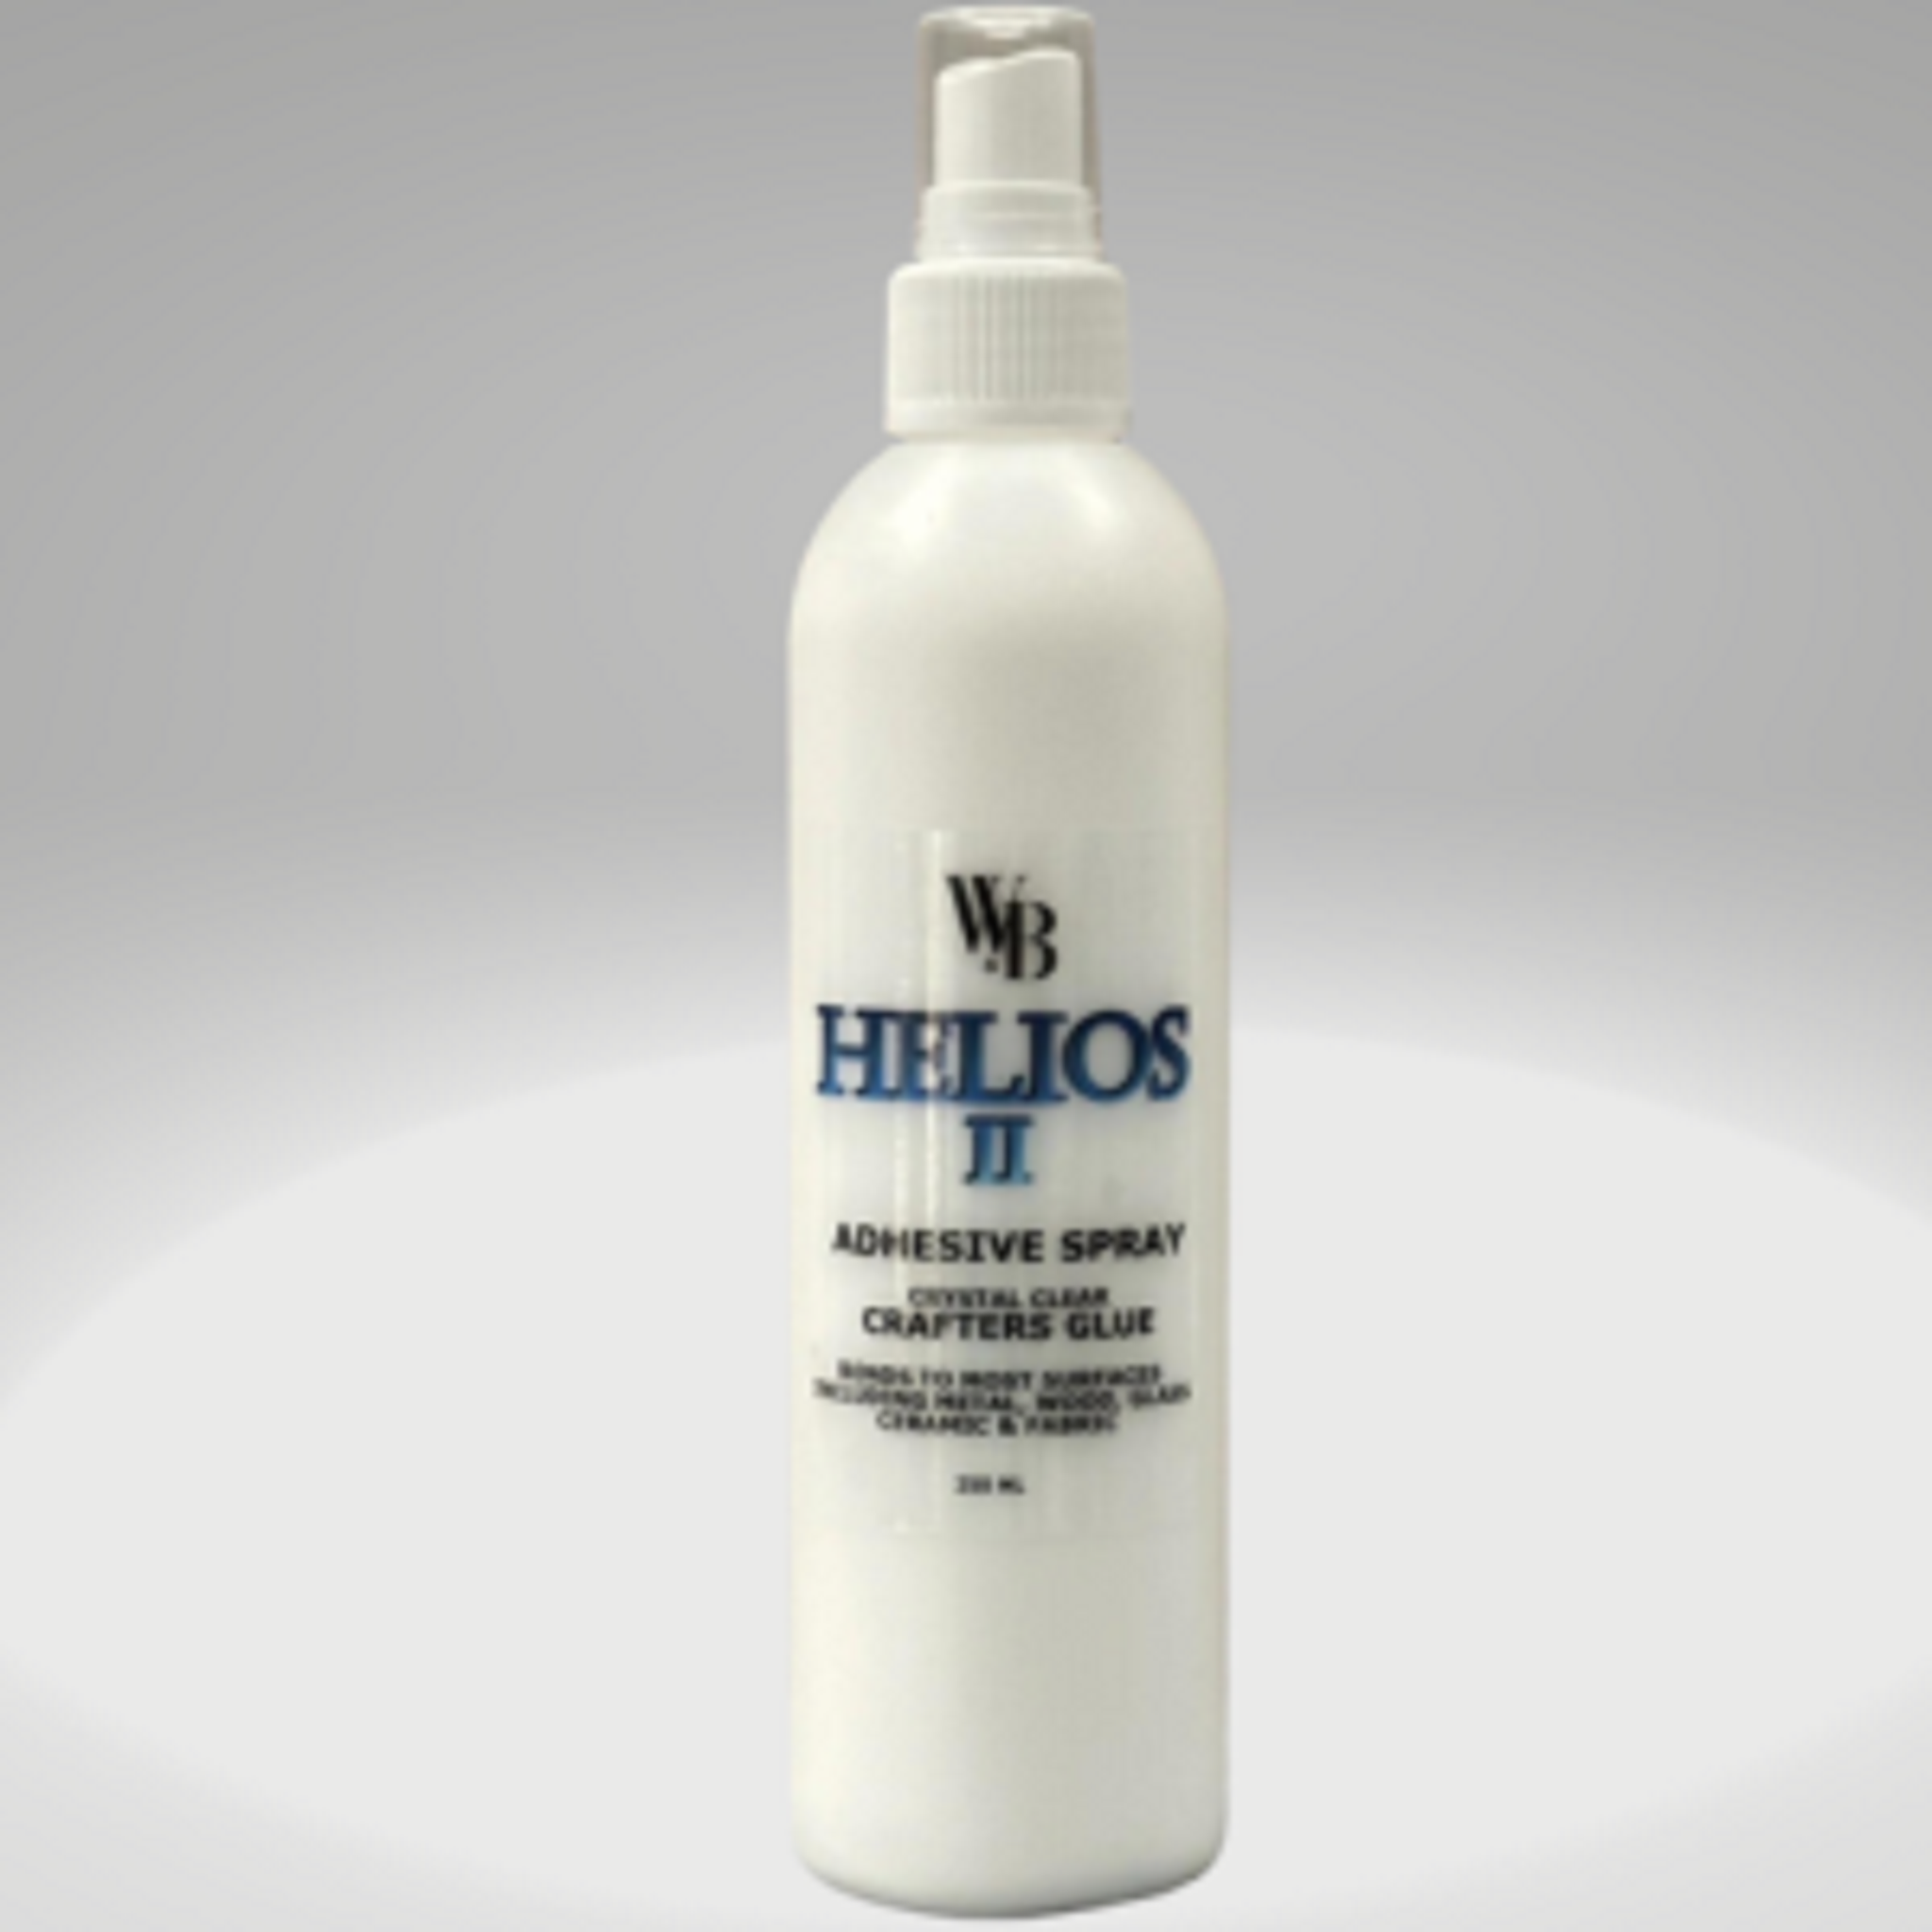 HELIOS II – Crystal Clear Spray Adhesive